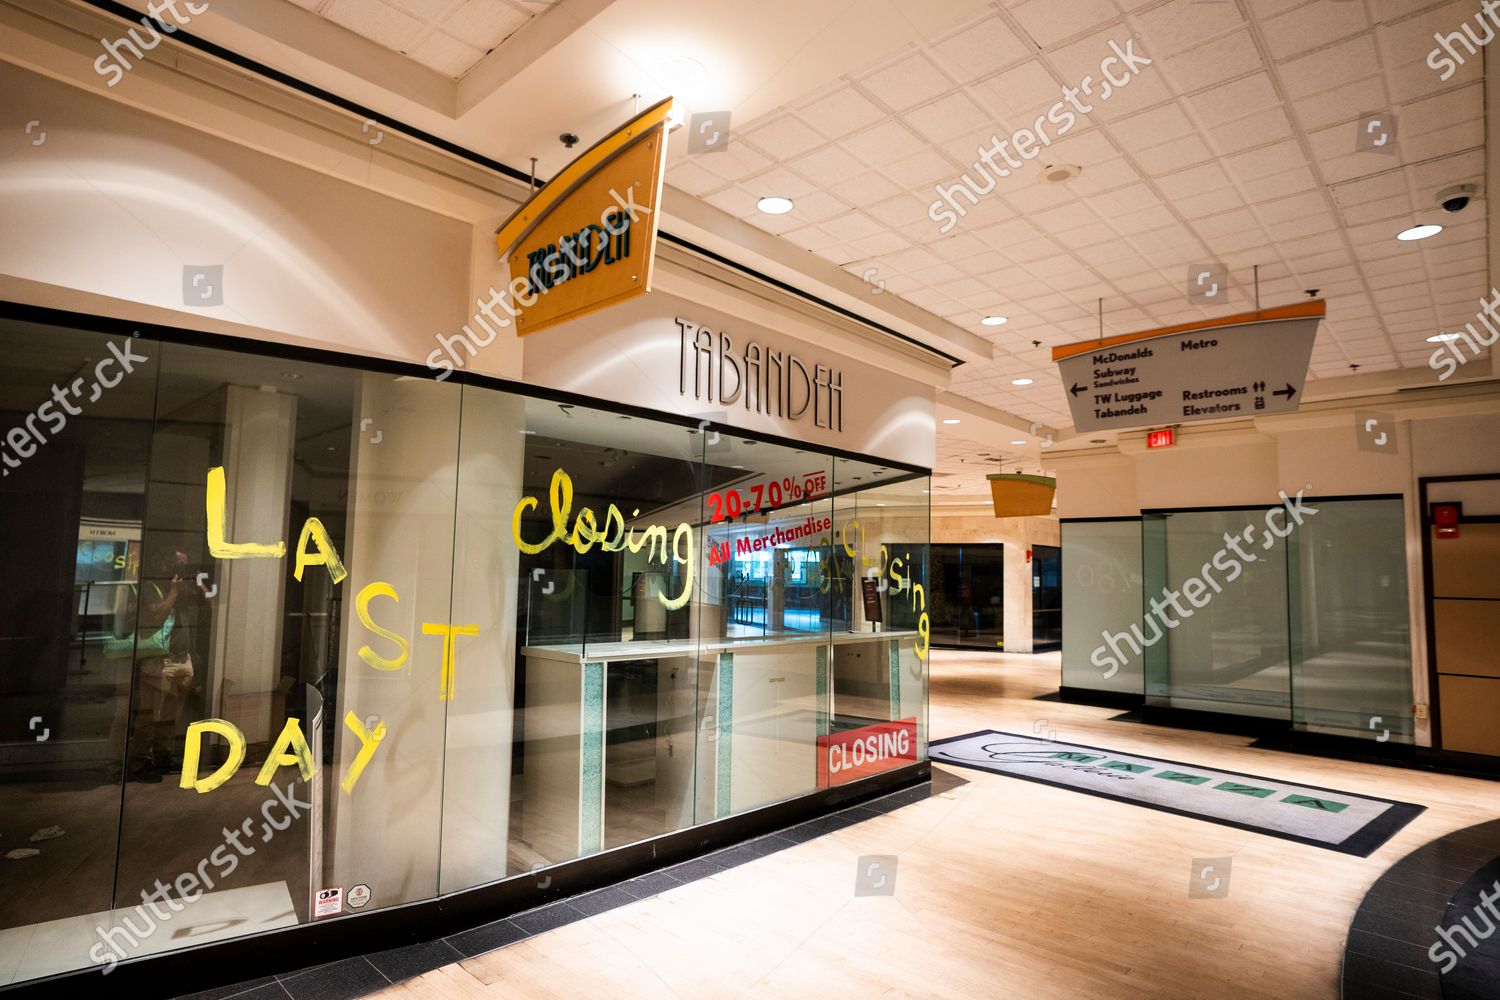 Neiman Marcus to close Mazza Gallerie store - Washington Business